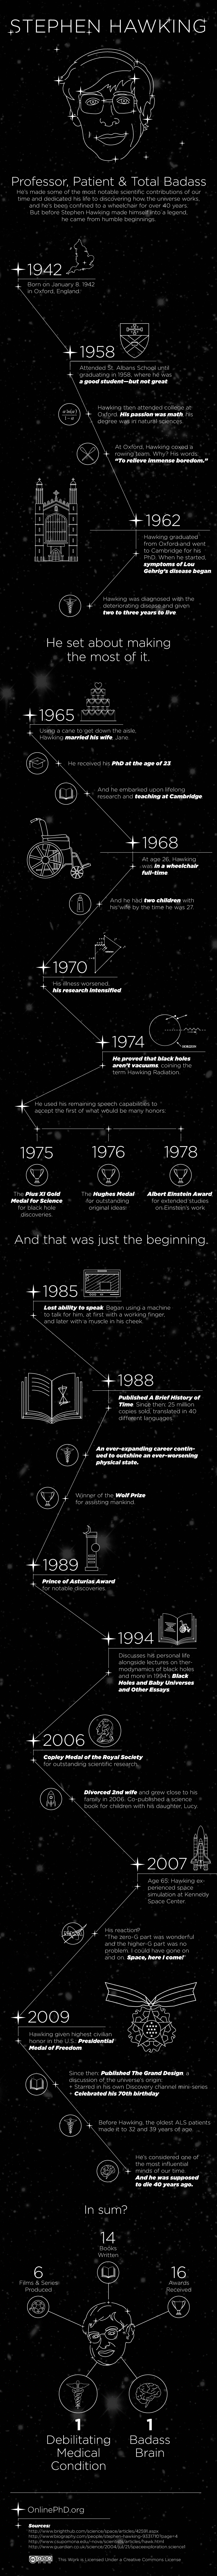 Stephen Hawking Infographic